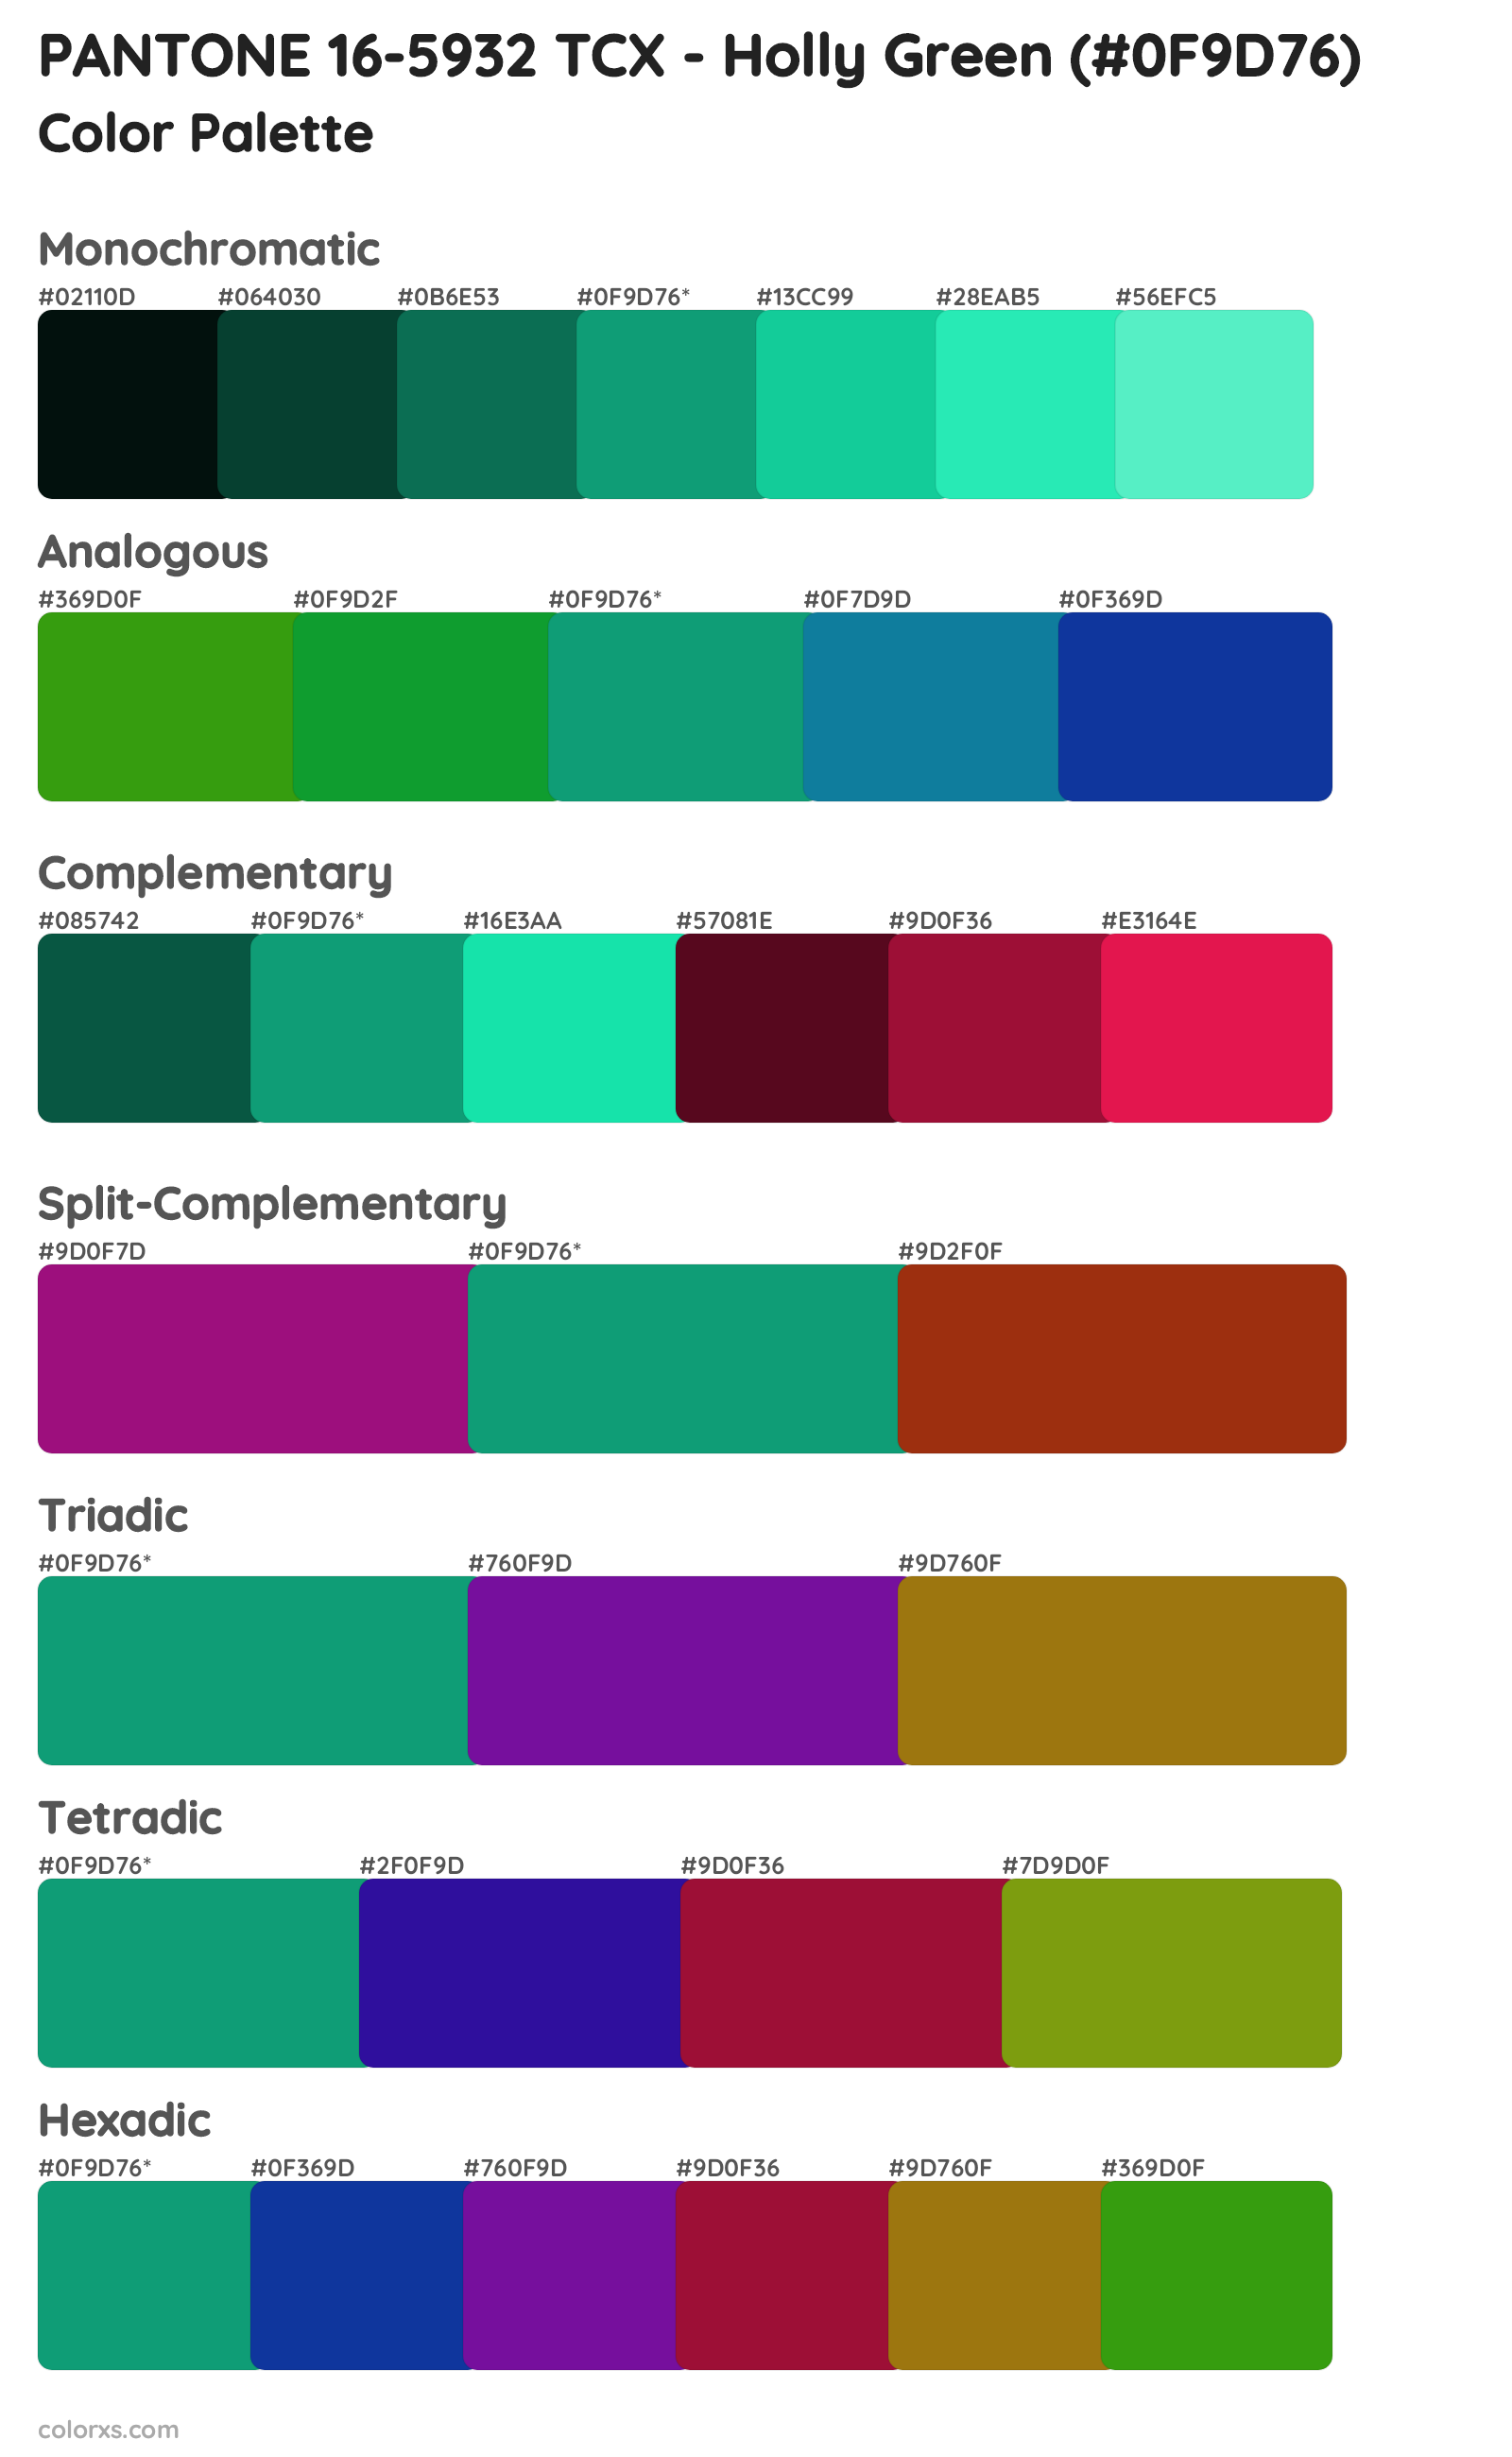 PANTONE 16-5932 TCX - Holly Green Color Scheme Palettes